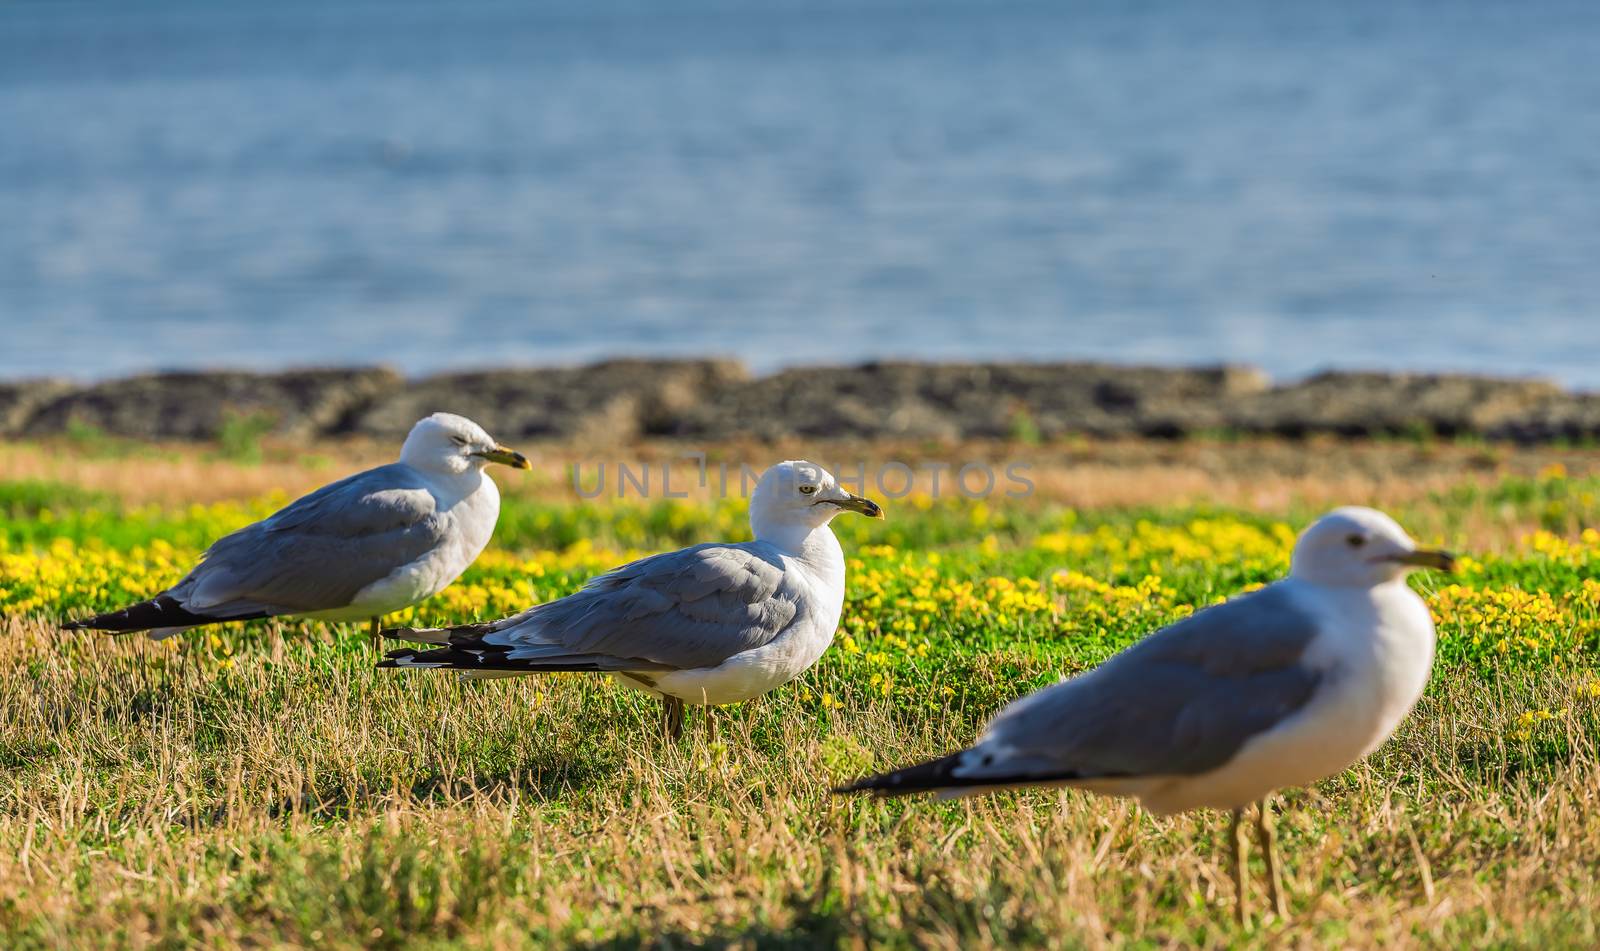 Amazing seagulls in the wild in Ontario, Canada.